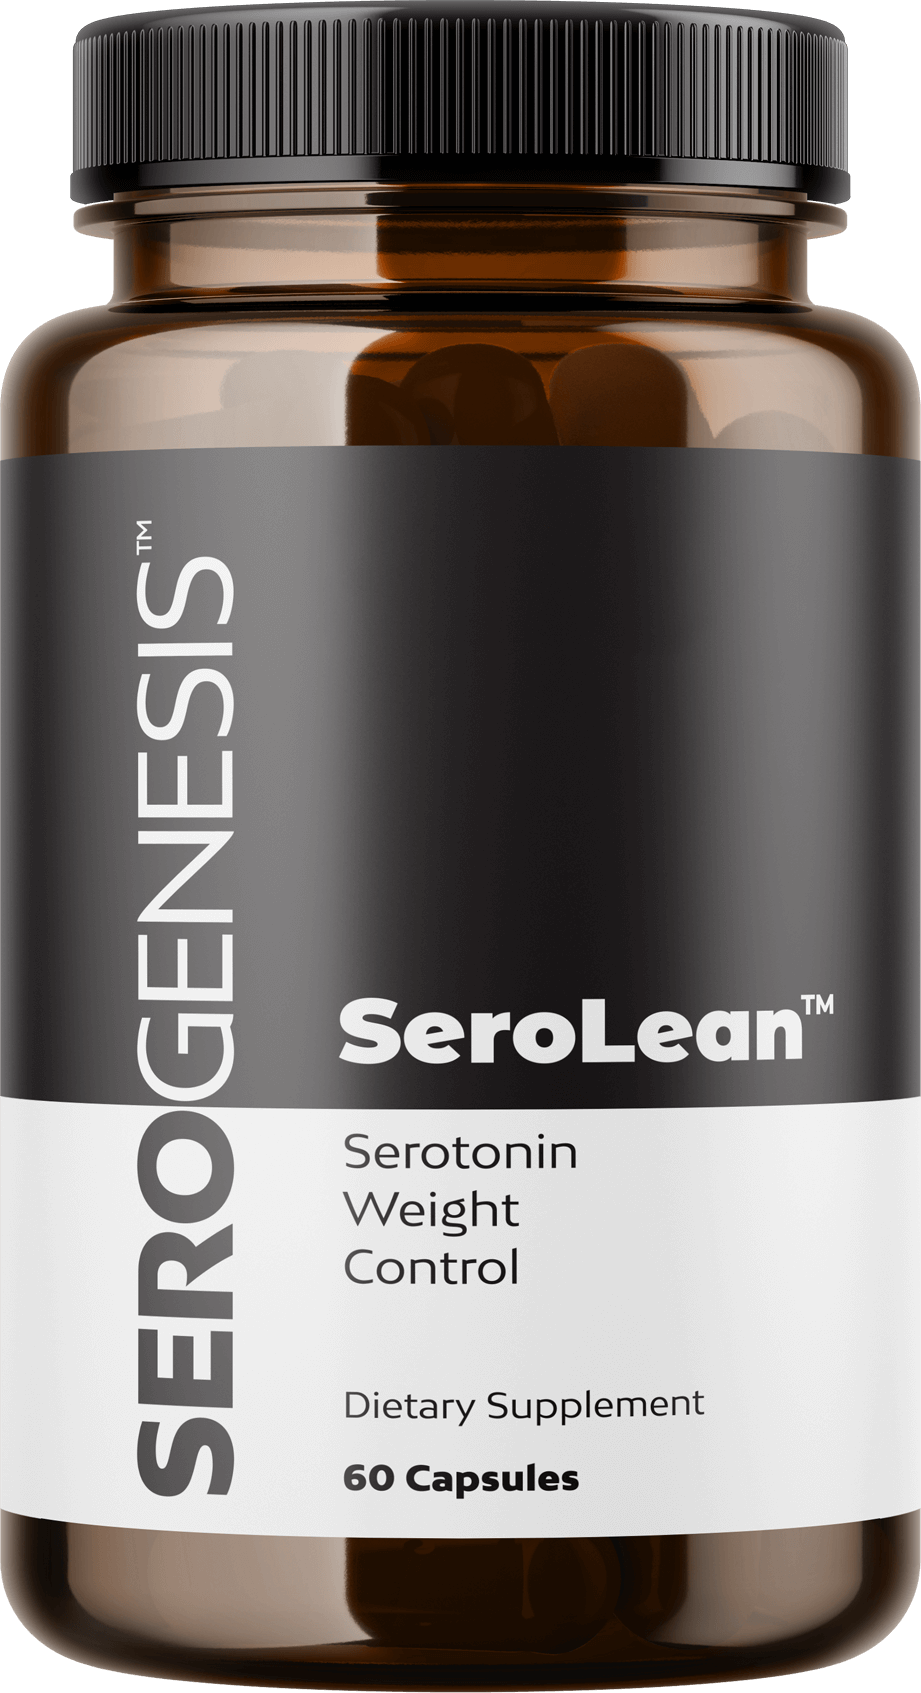 Serolean 60-180 Days Usage Review